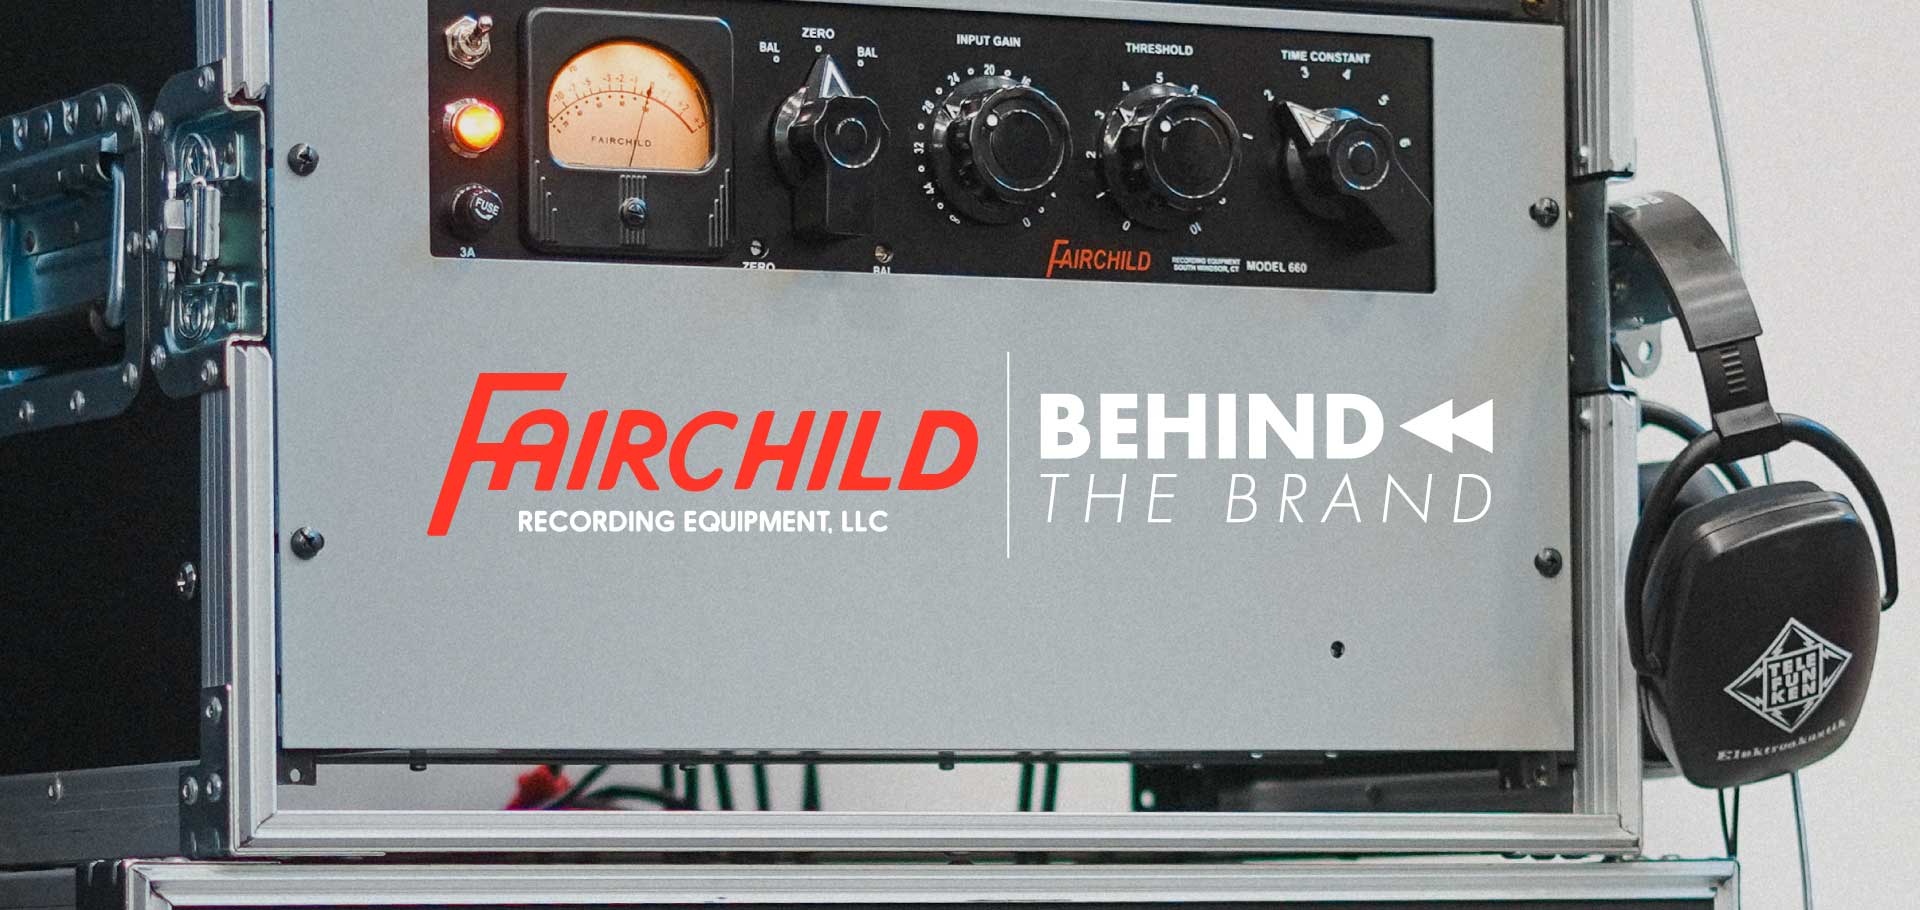 Fairchild USA - Behind the Brand